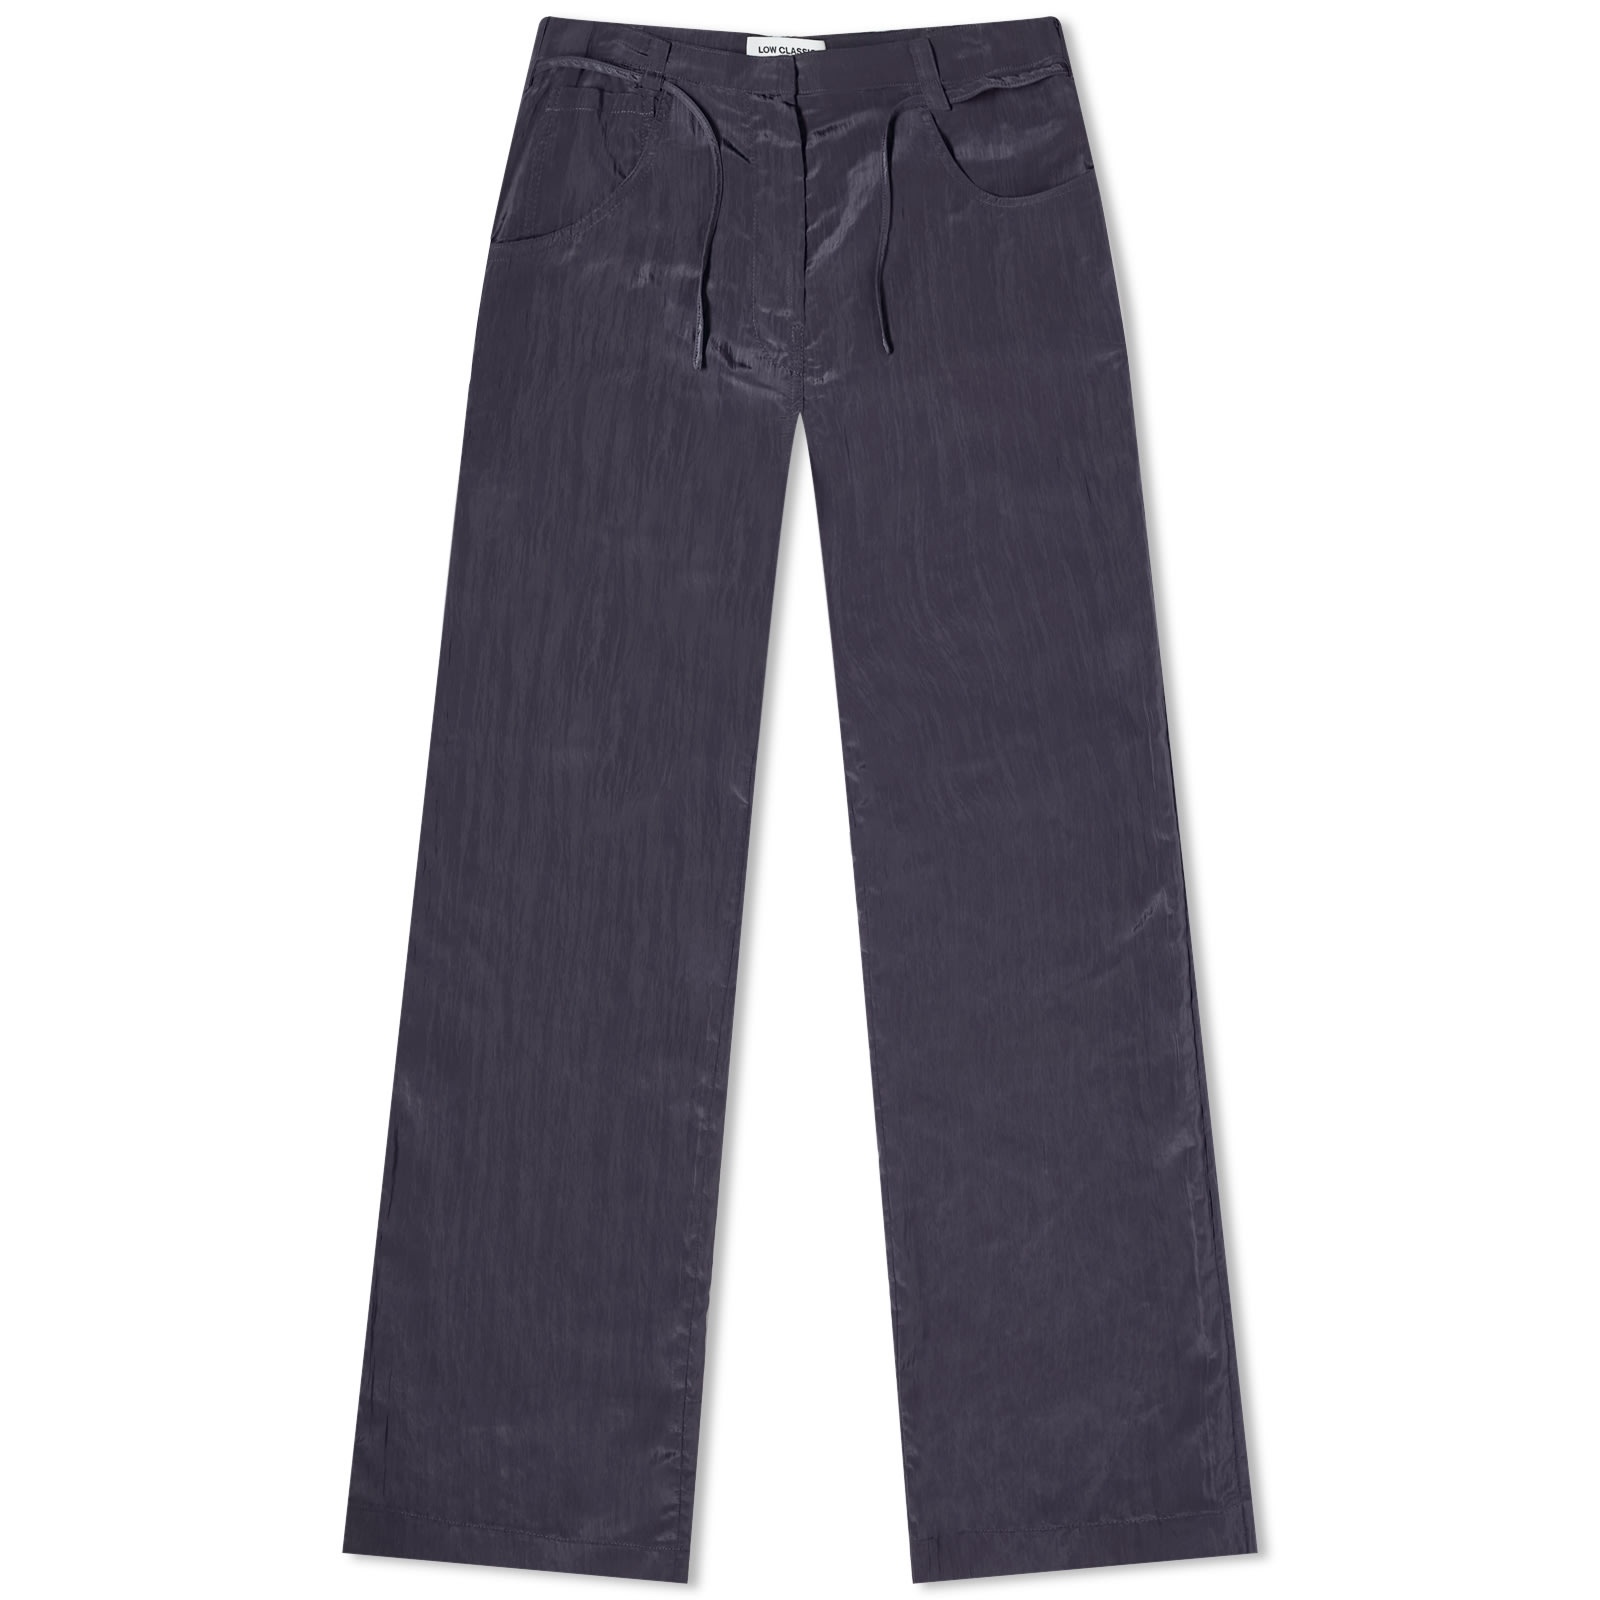 Low Classic Crinkle Slim Fit Pants - 1